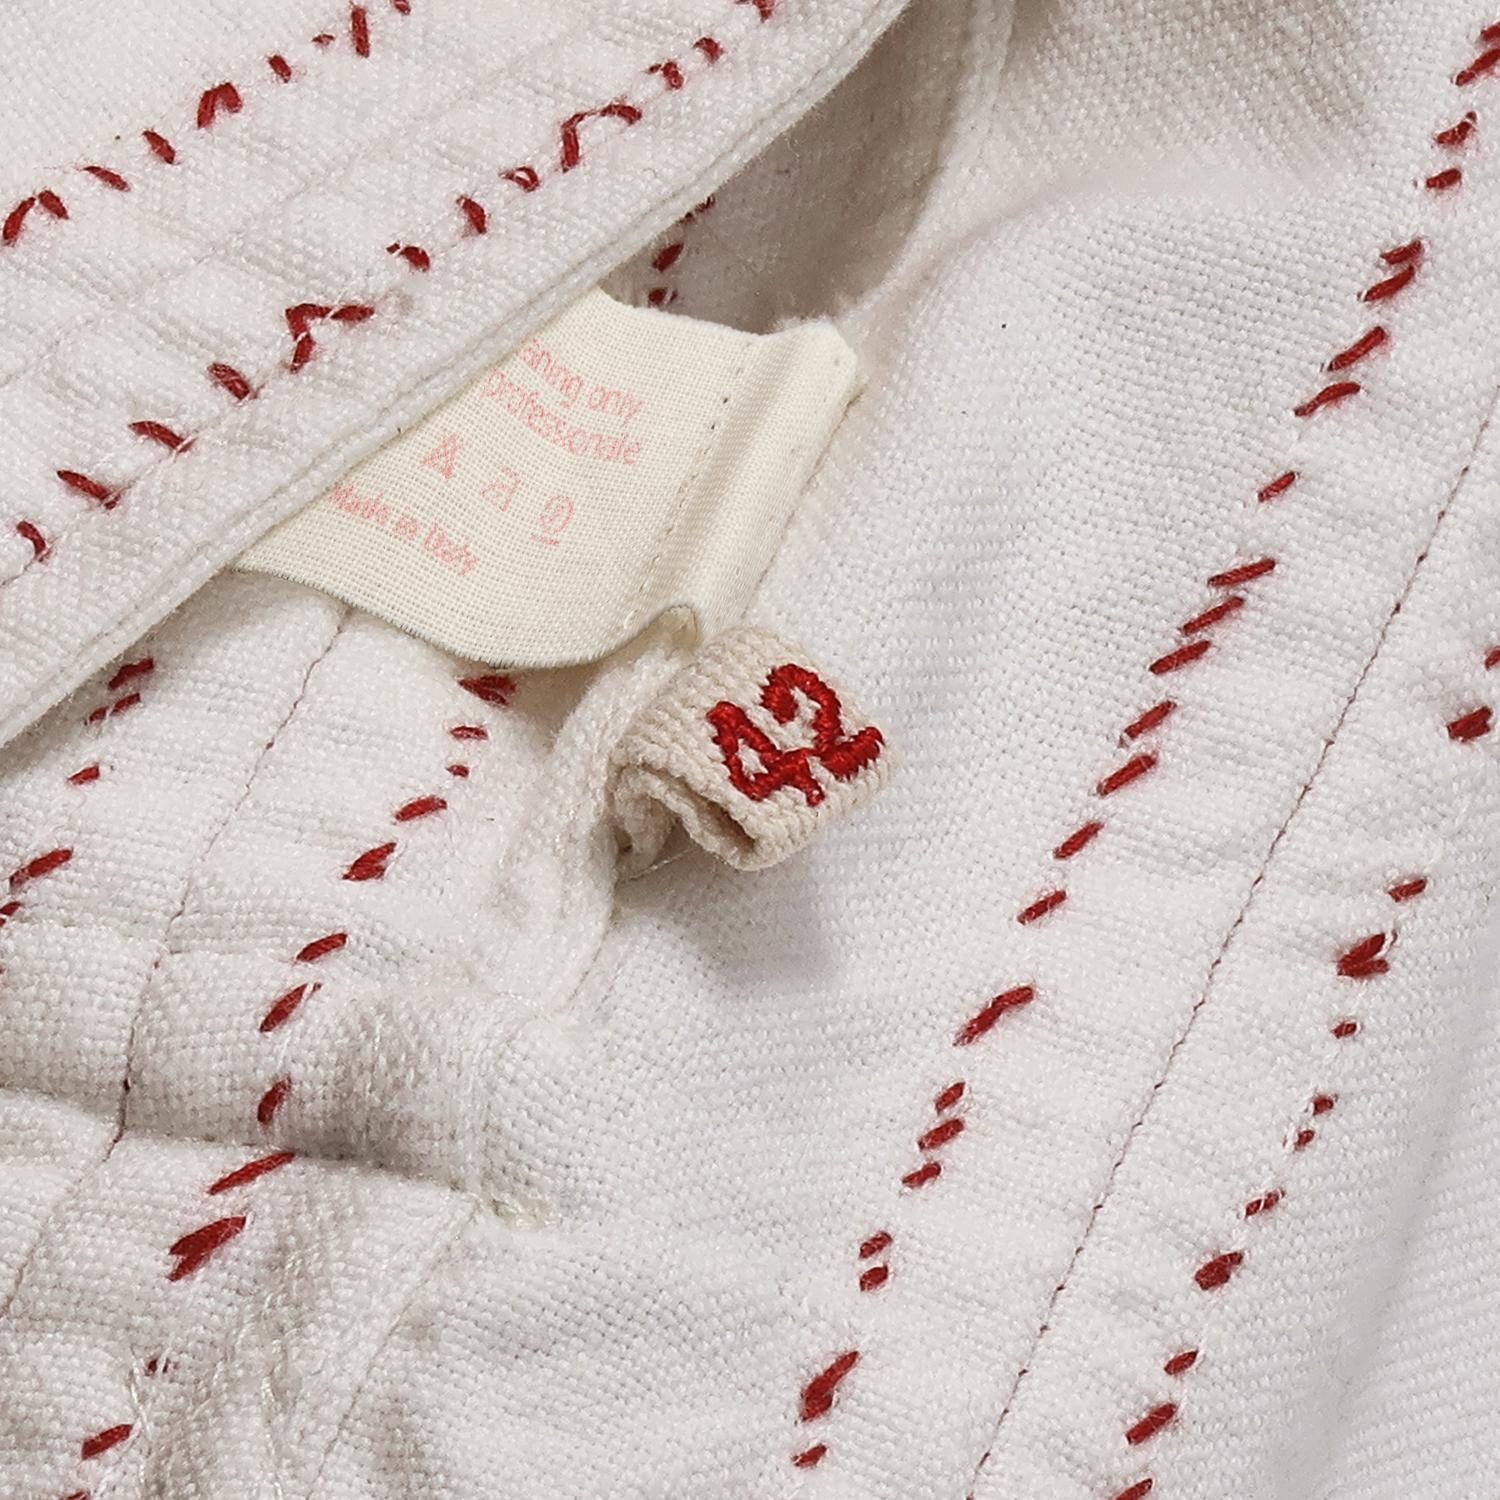 Marni by Consuelo Castiglioni SS-2003 Embroidered Cotton Cropped Jacket 2